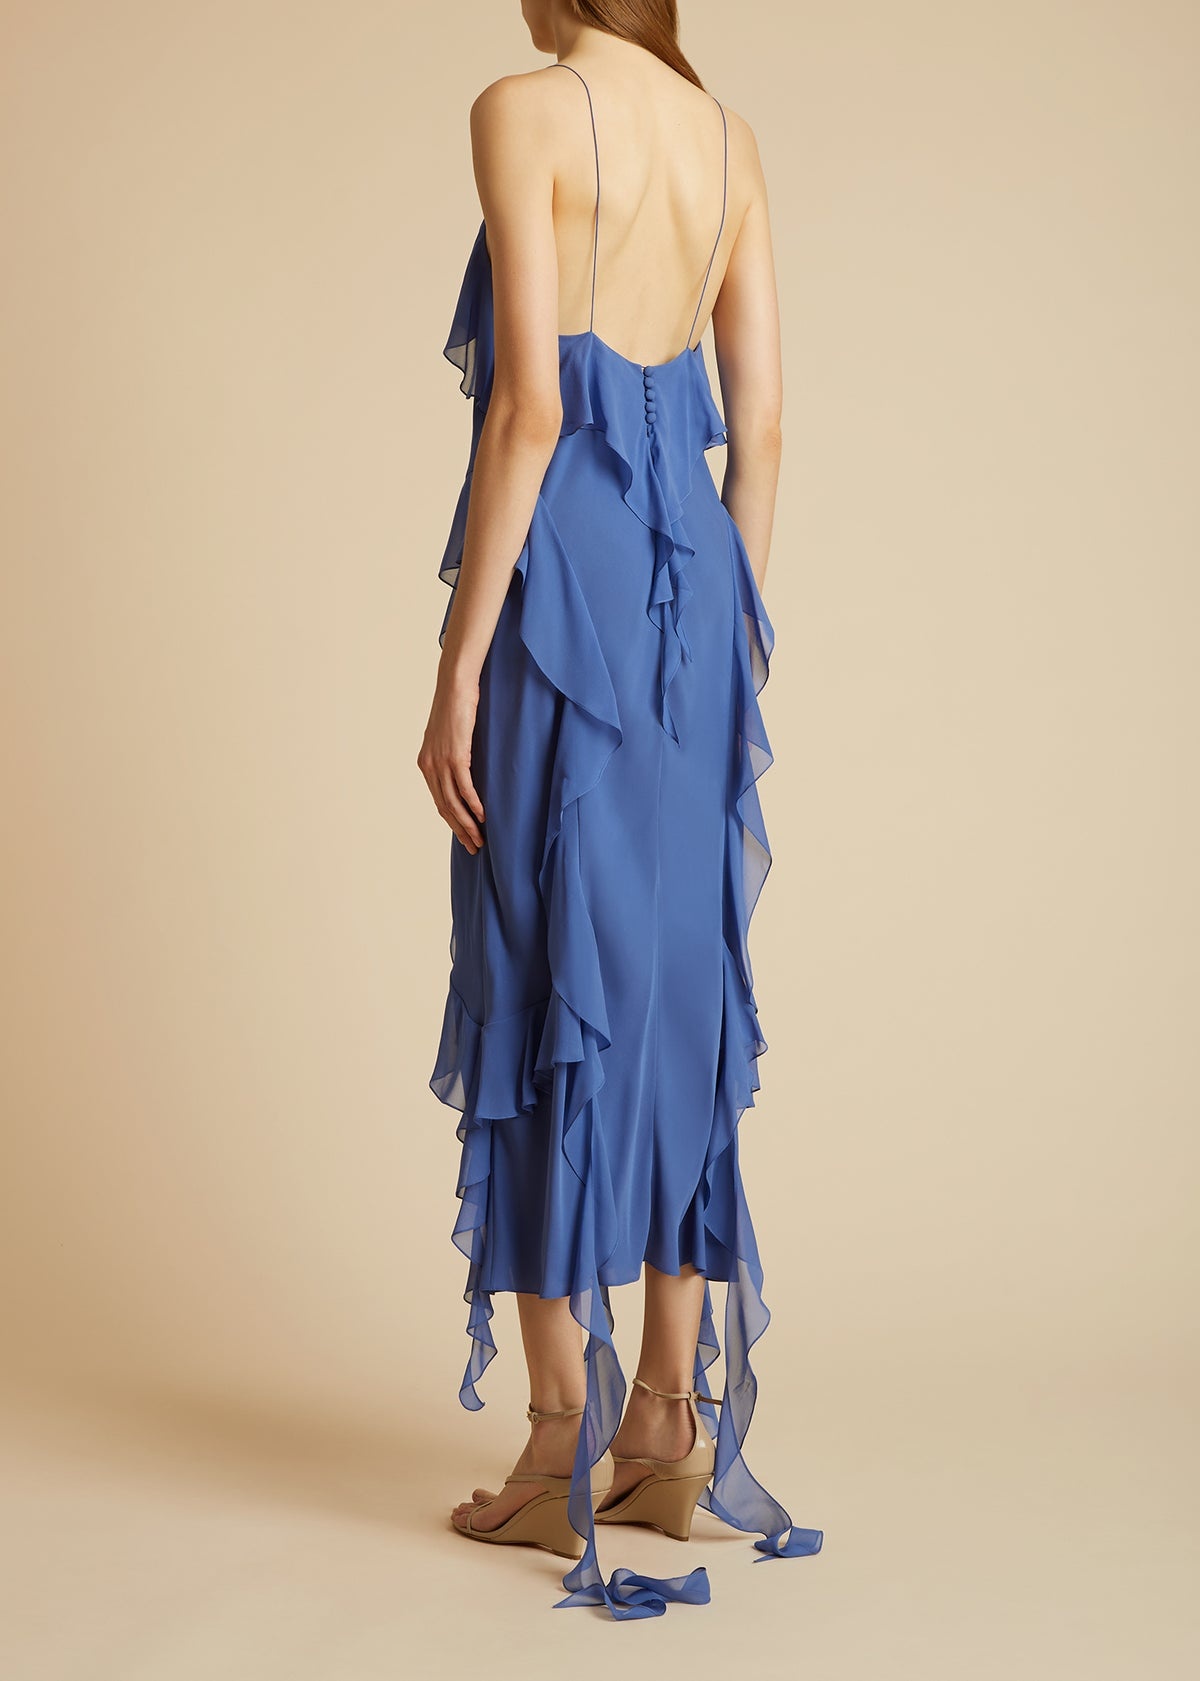 The Pim Dress in Blue Iris - 3